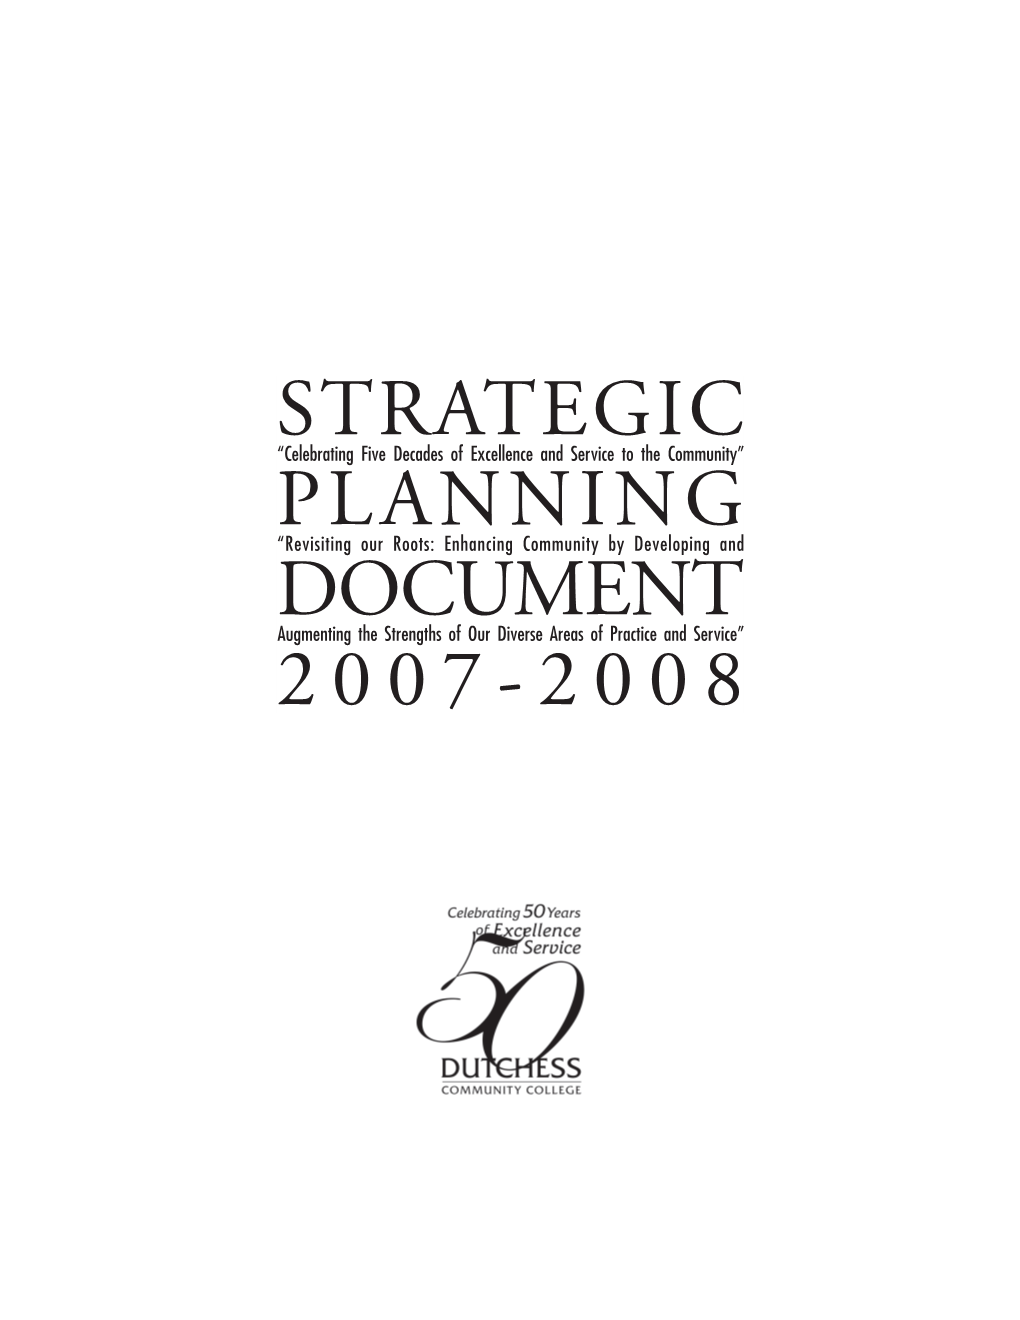 Strategic Planning Document 2007-2008